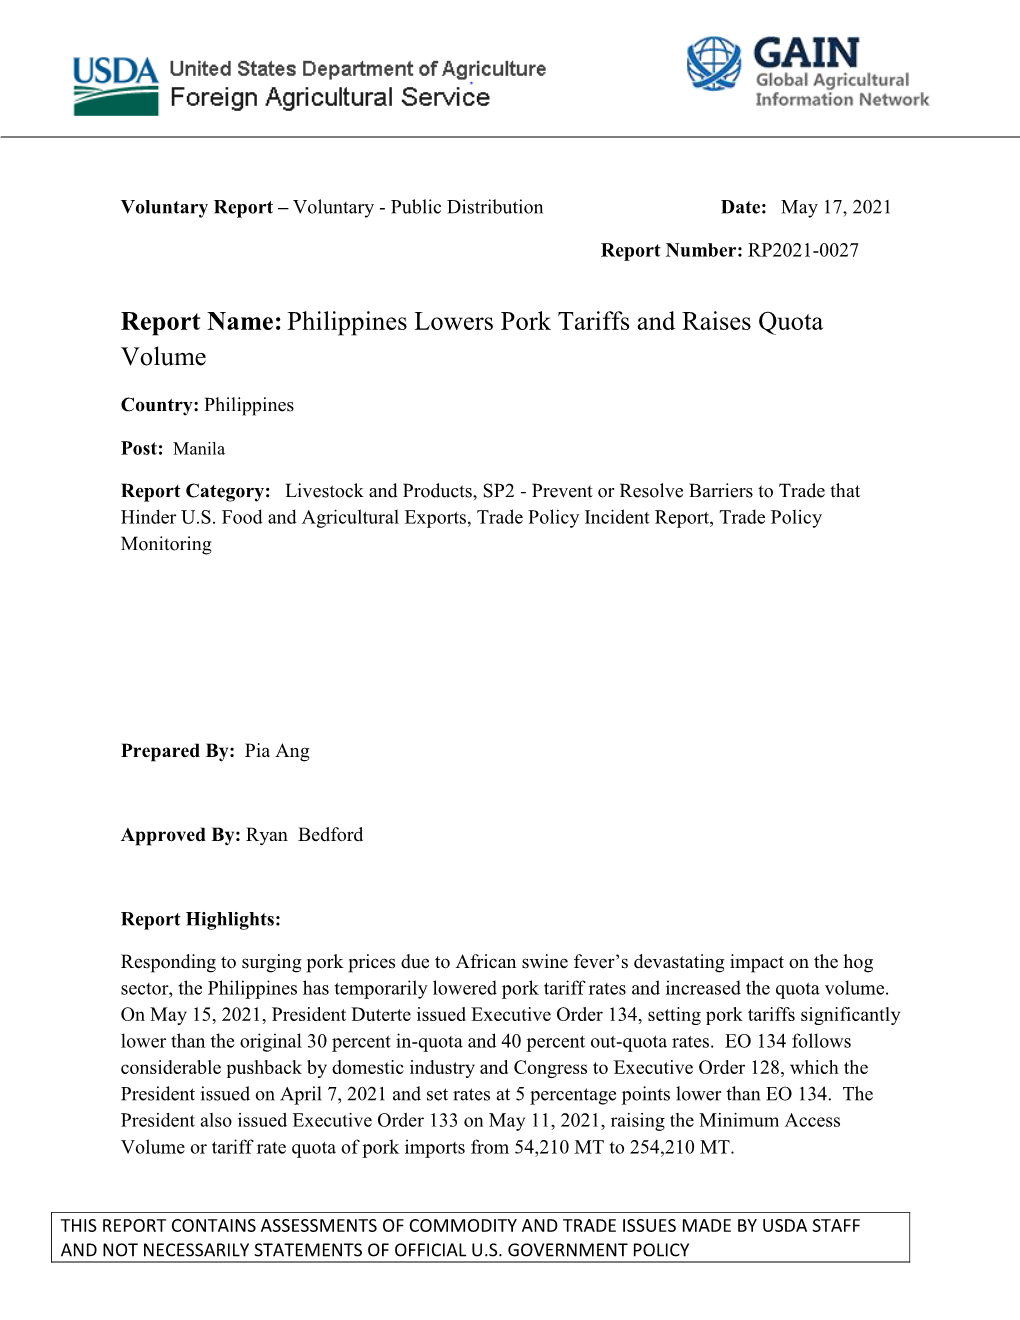 Report Name:Philippines Lowers Pork Tariffs and Raises Quota Volume